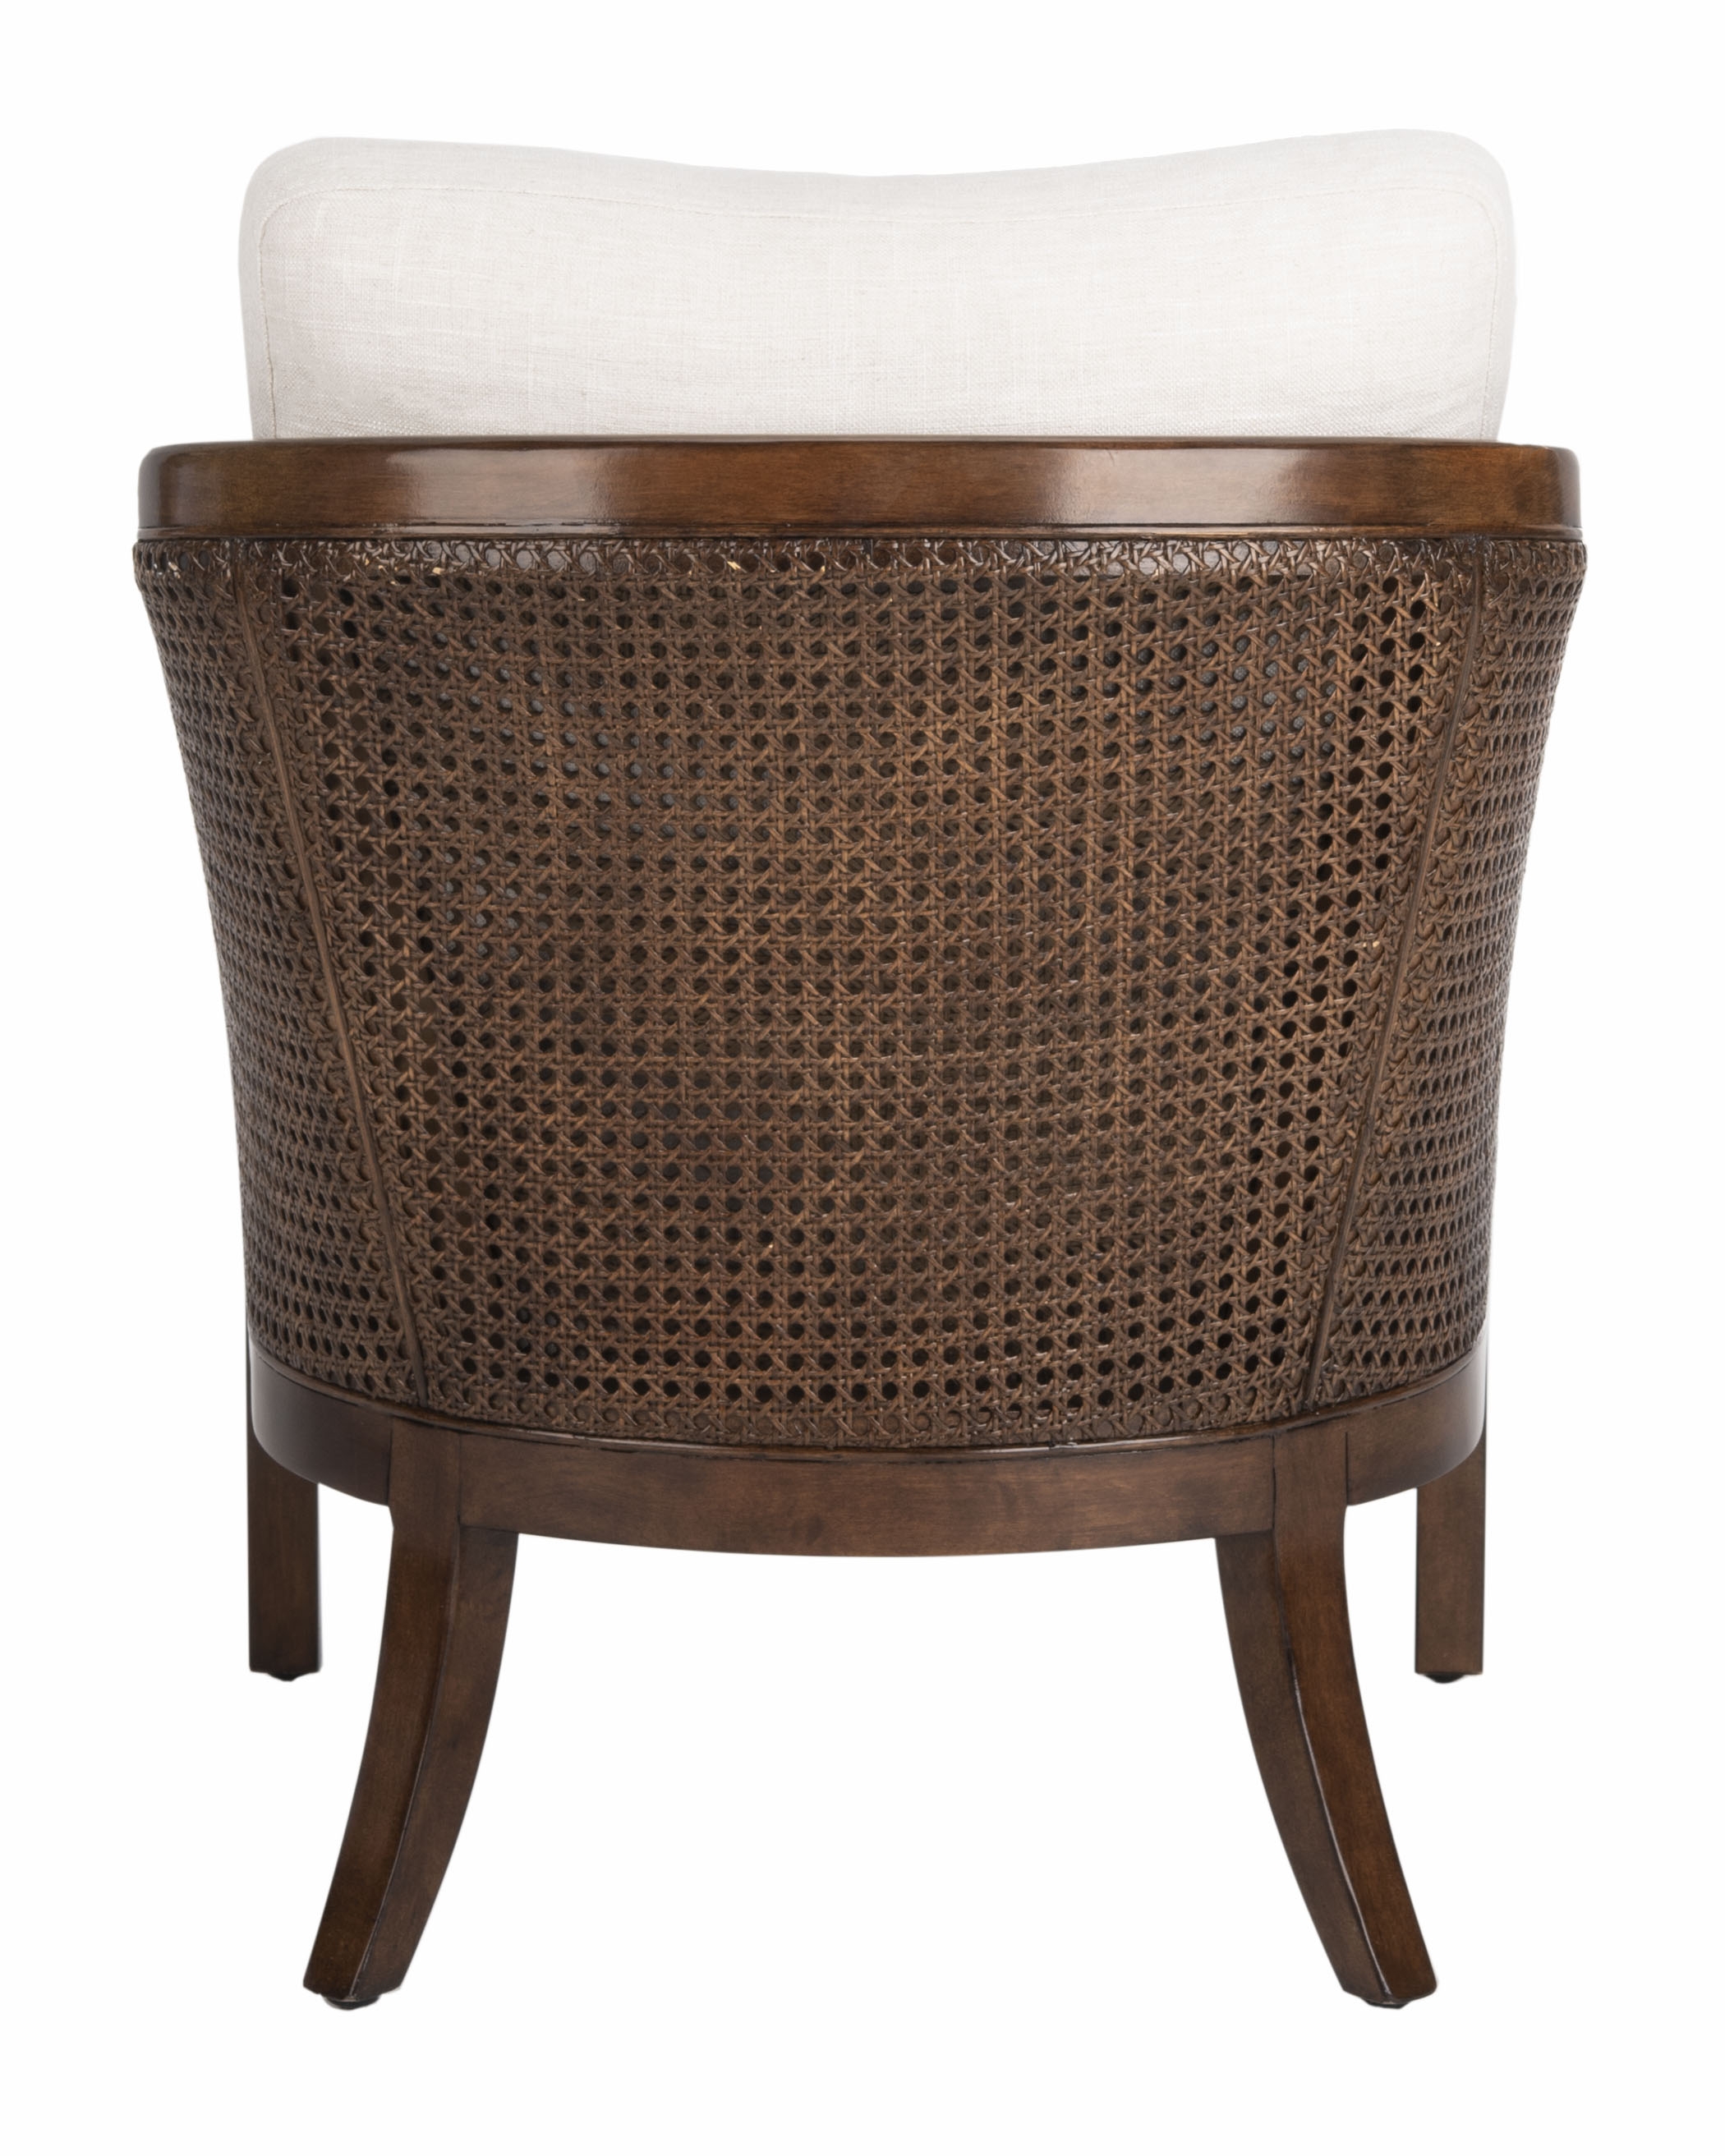 Caruso Barrel Back Chair - Oatmeal - Arlo Home - Image 3